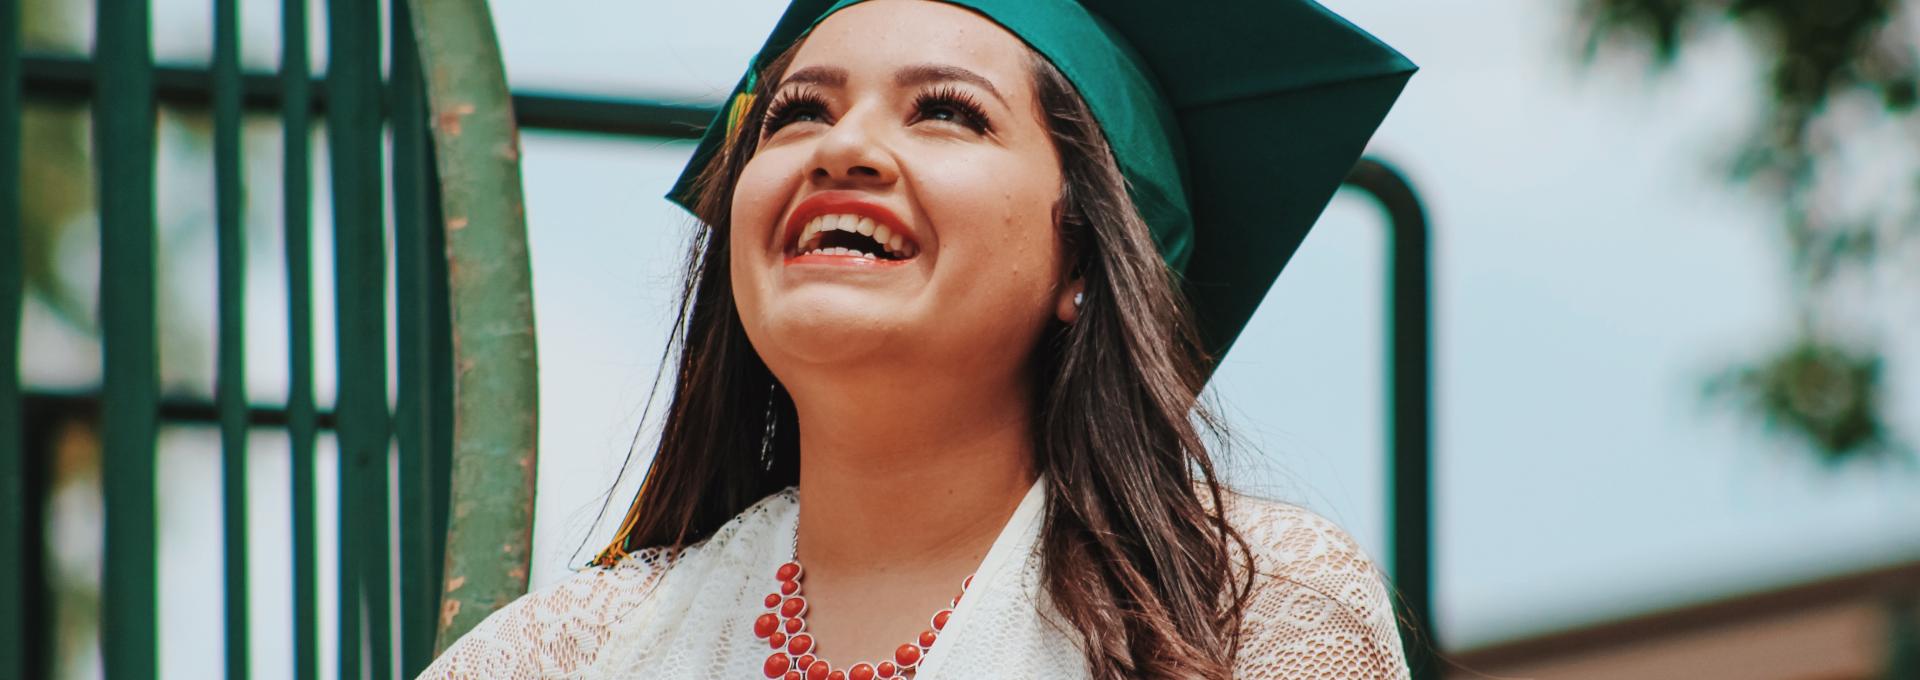 Graduating Student girl looking upward smiling